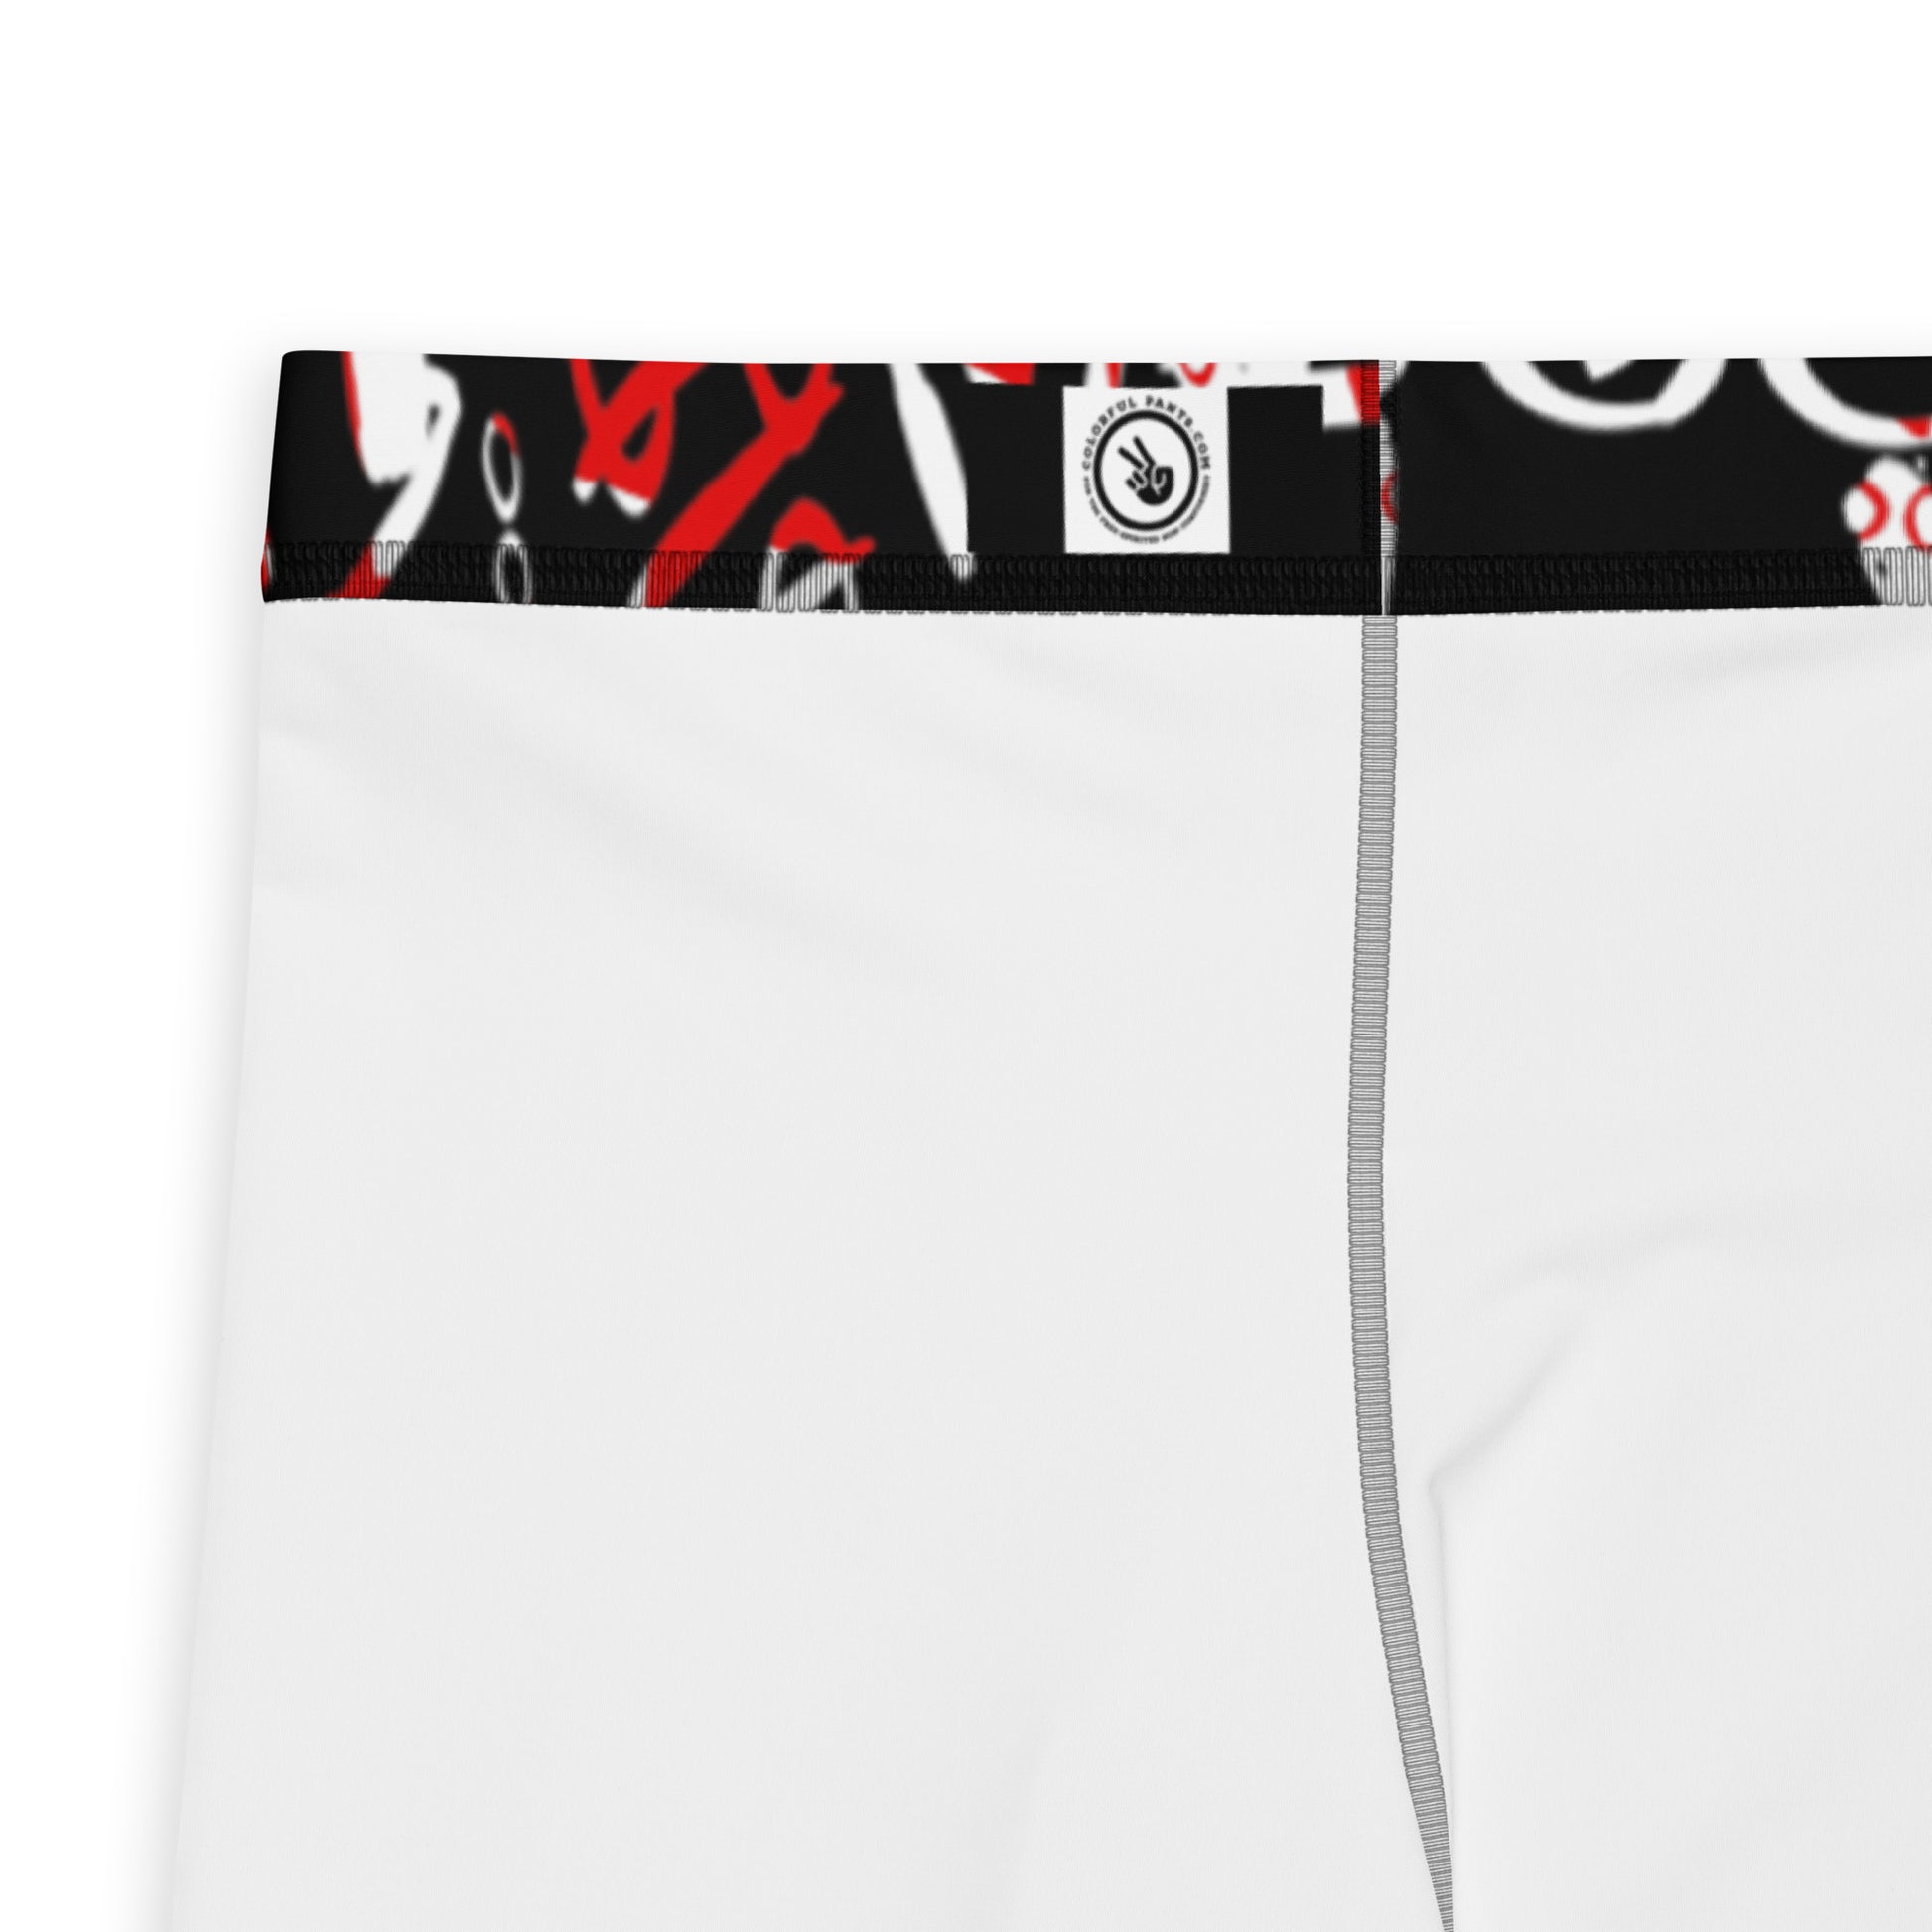 Men's all-over print leggings with white background, full-back view.